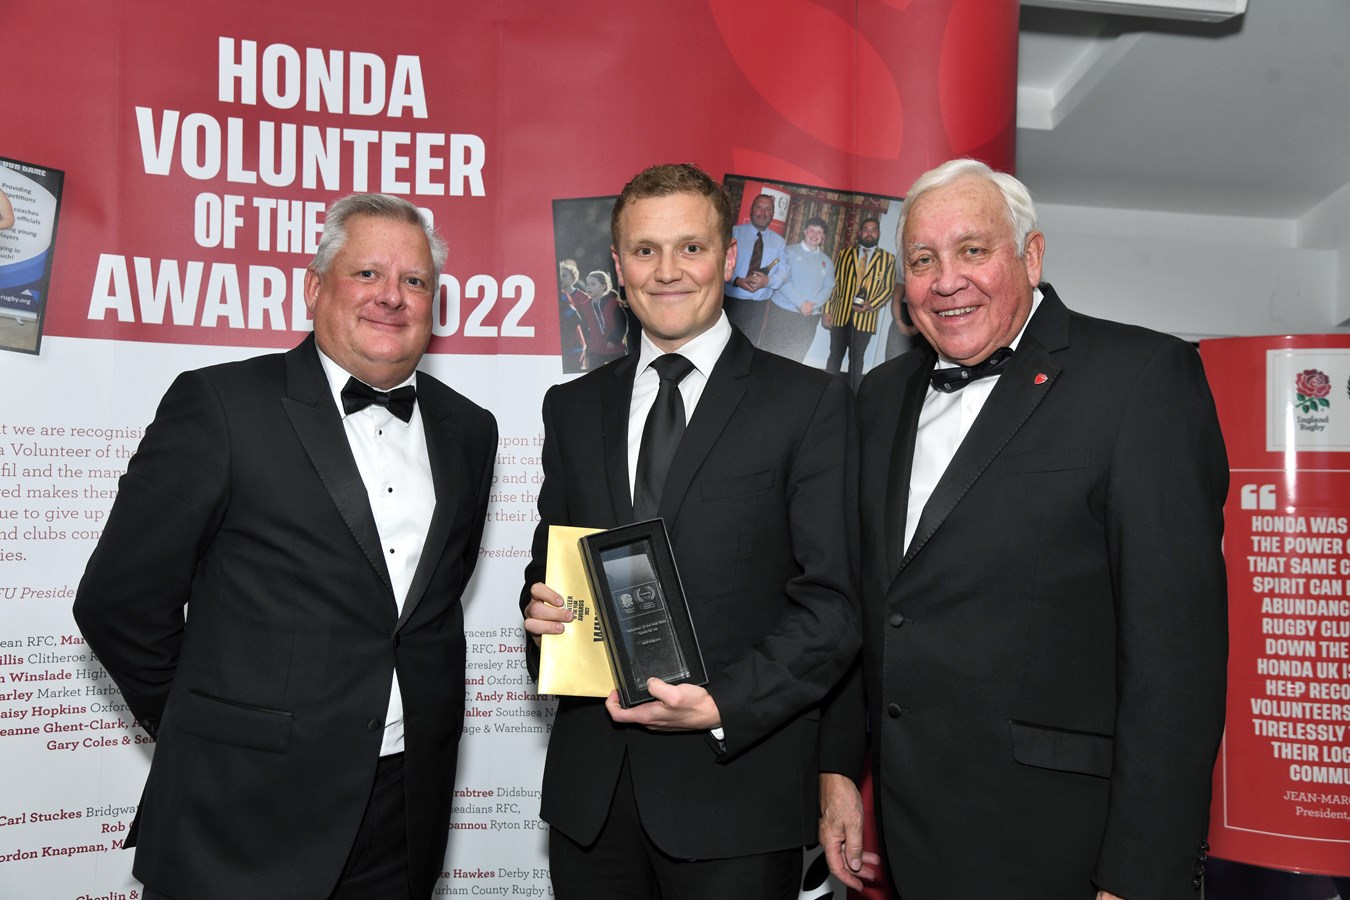 Honda Volunteer of the Year Awards - Steve Morris - Honda UK Head of Power Products, Will Gilgrass - Award Winner, Rob Briers - RFU Vice President